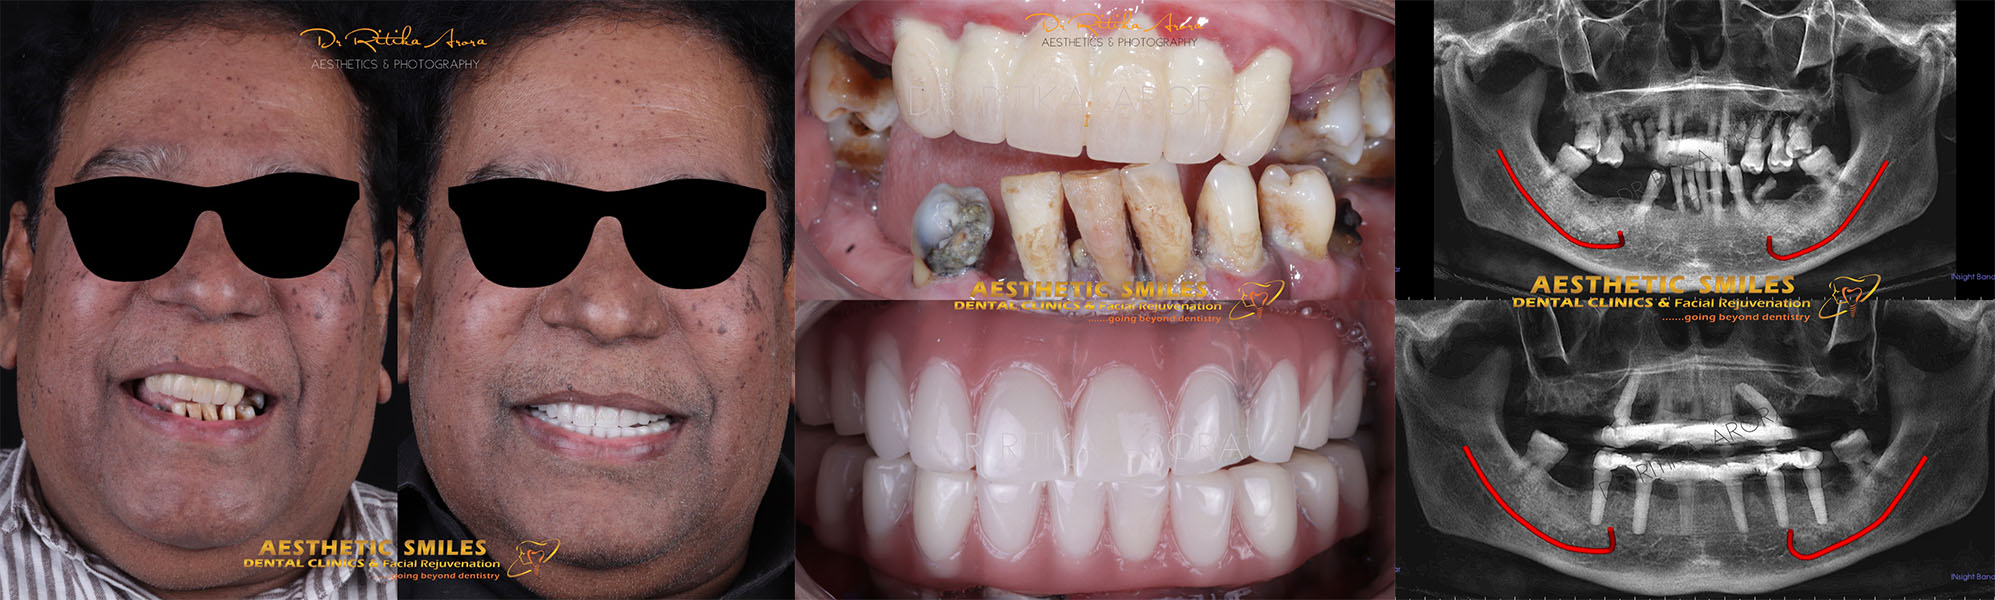 dental implants in mumbai case 2